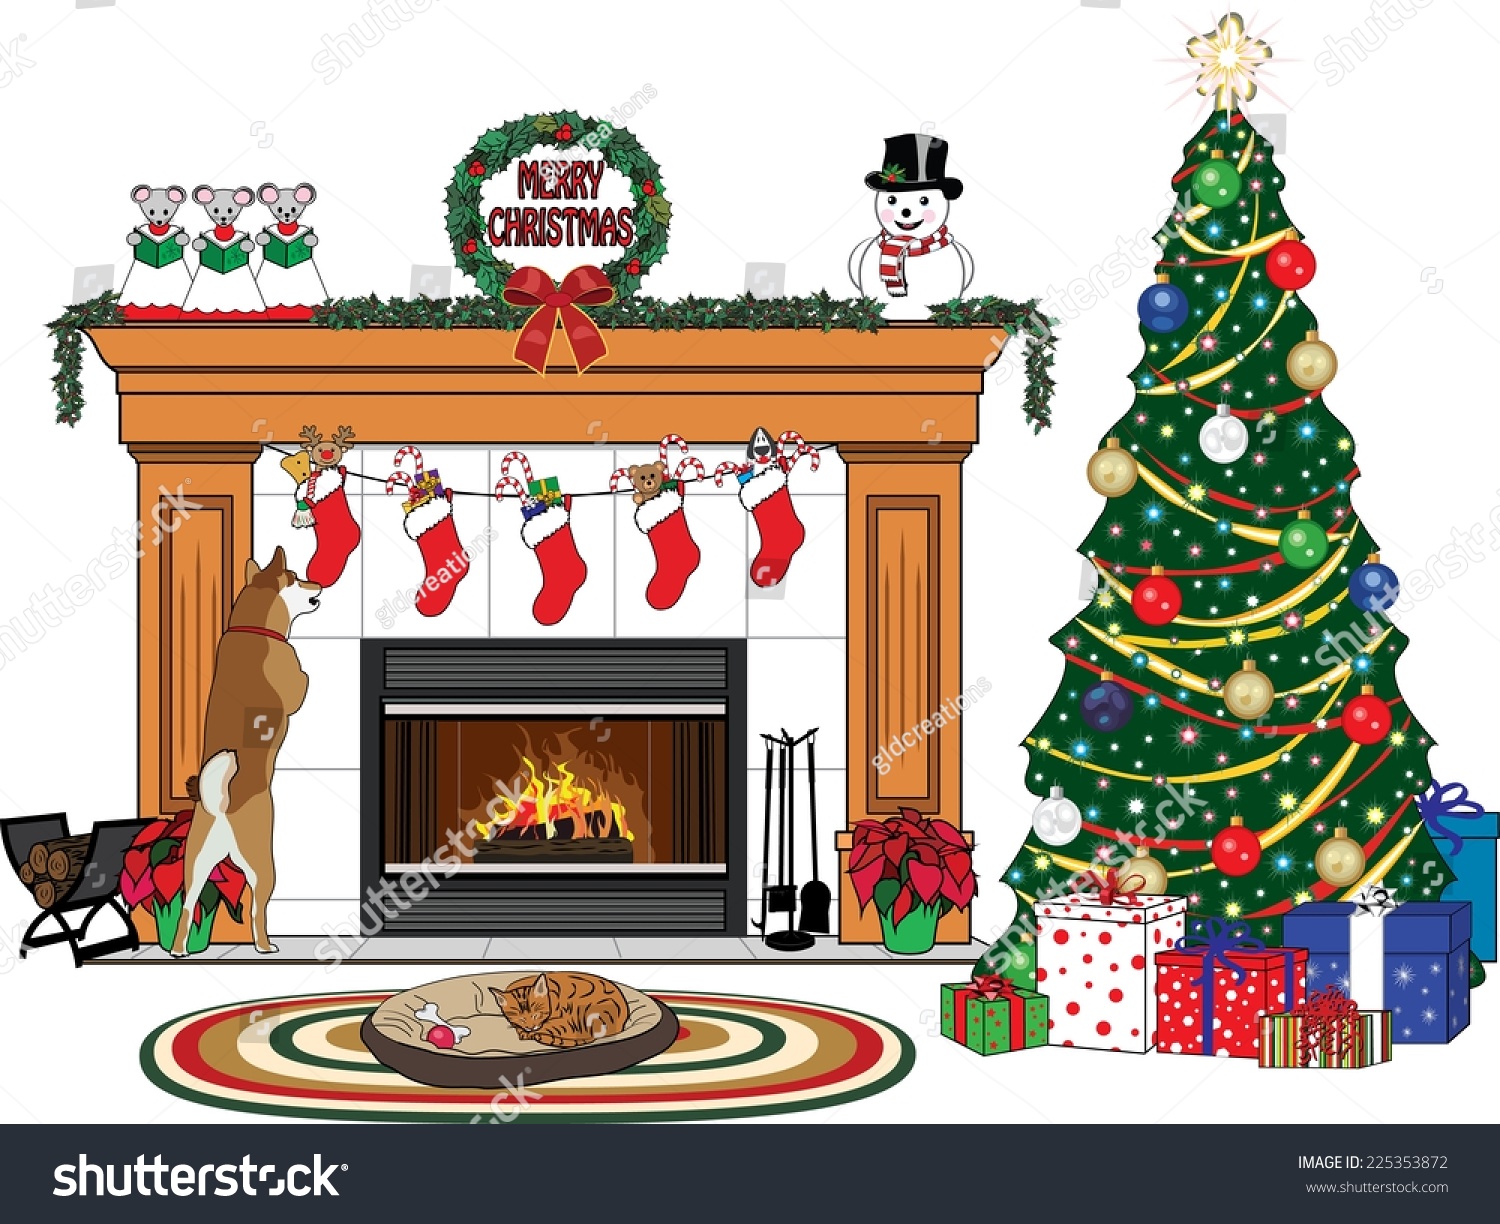 Christmas Scene Christmas Tree Stockings Presents Stock ...